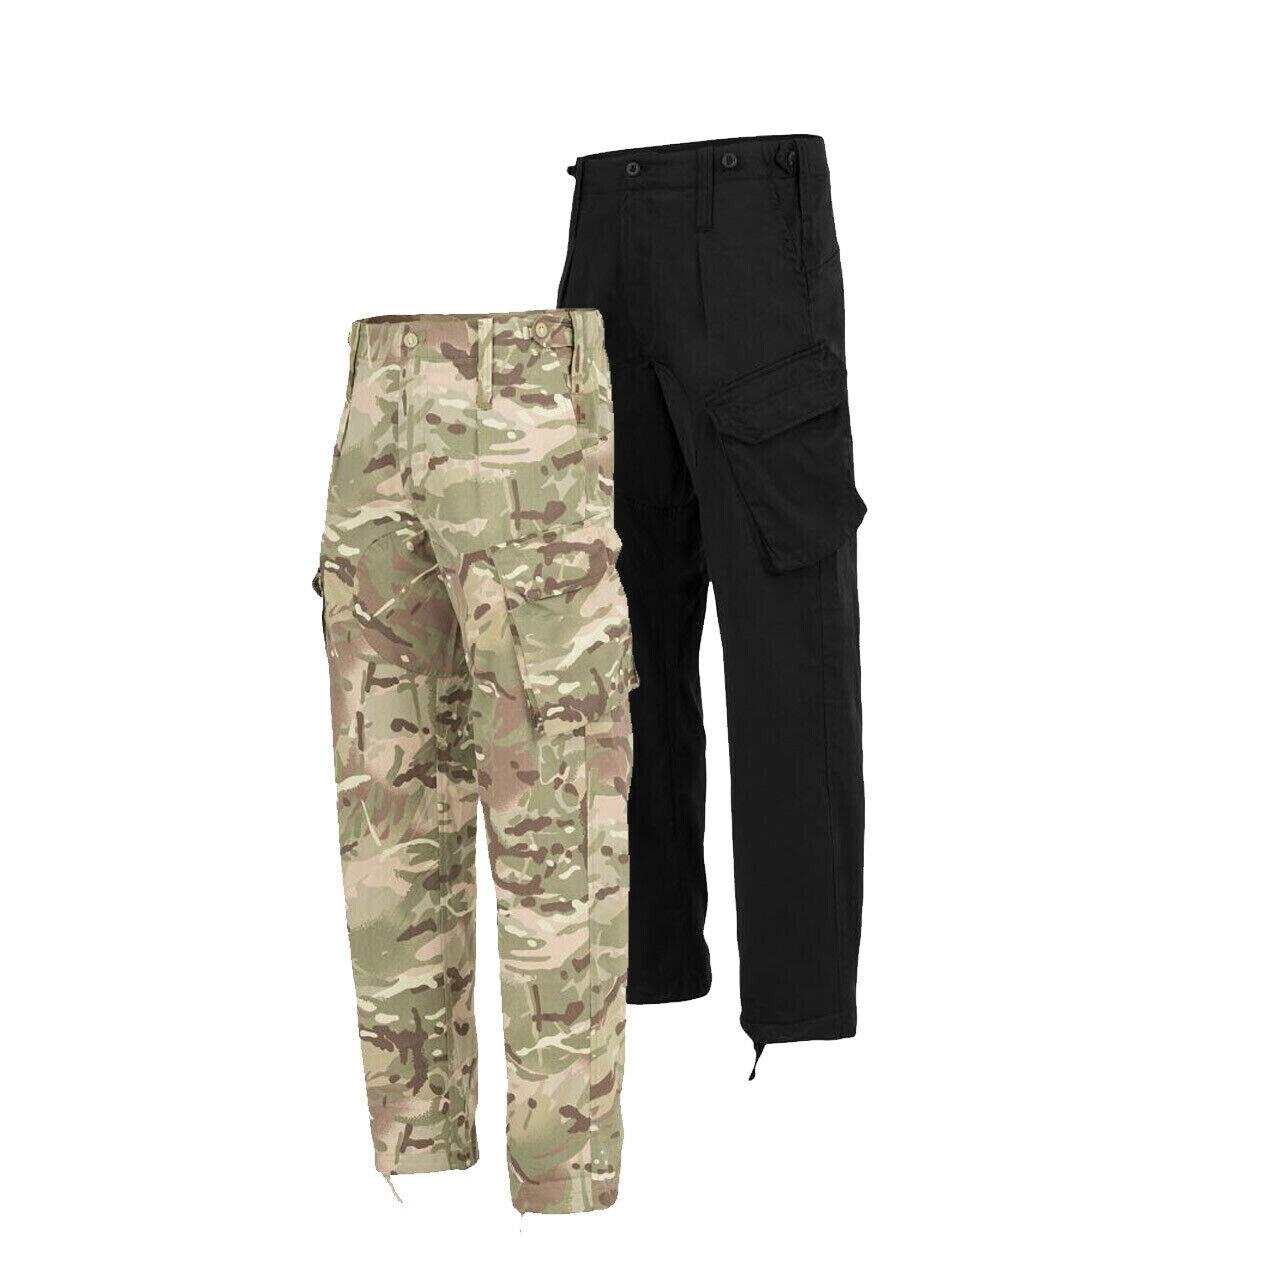 Tactical uniform war Highlander US Kryptek BDU uniforms (jacket & pants)  Army military tactical cargo pants uniform winter pants